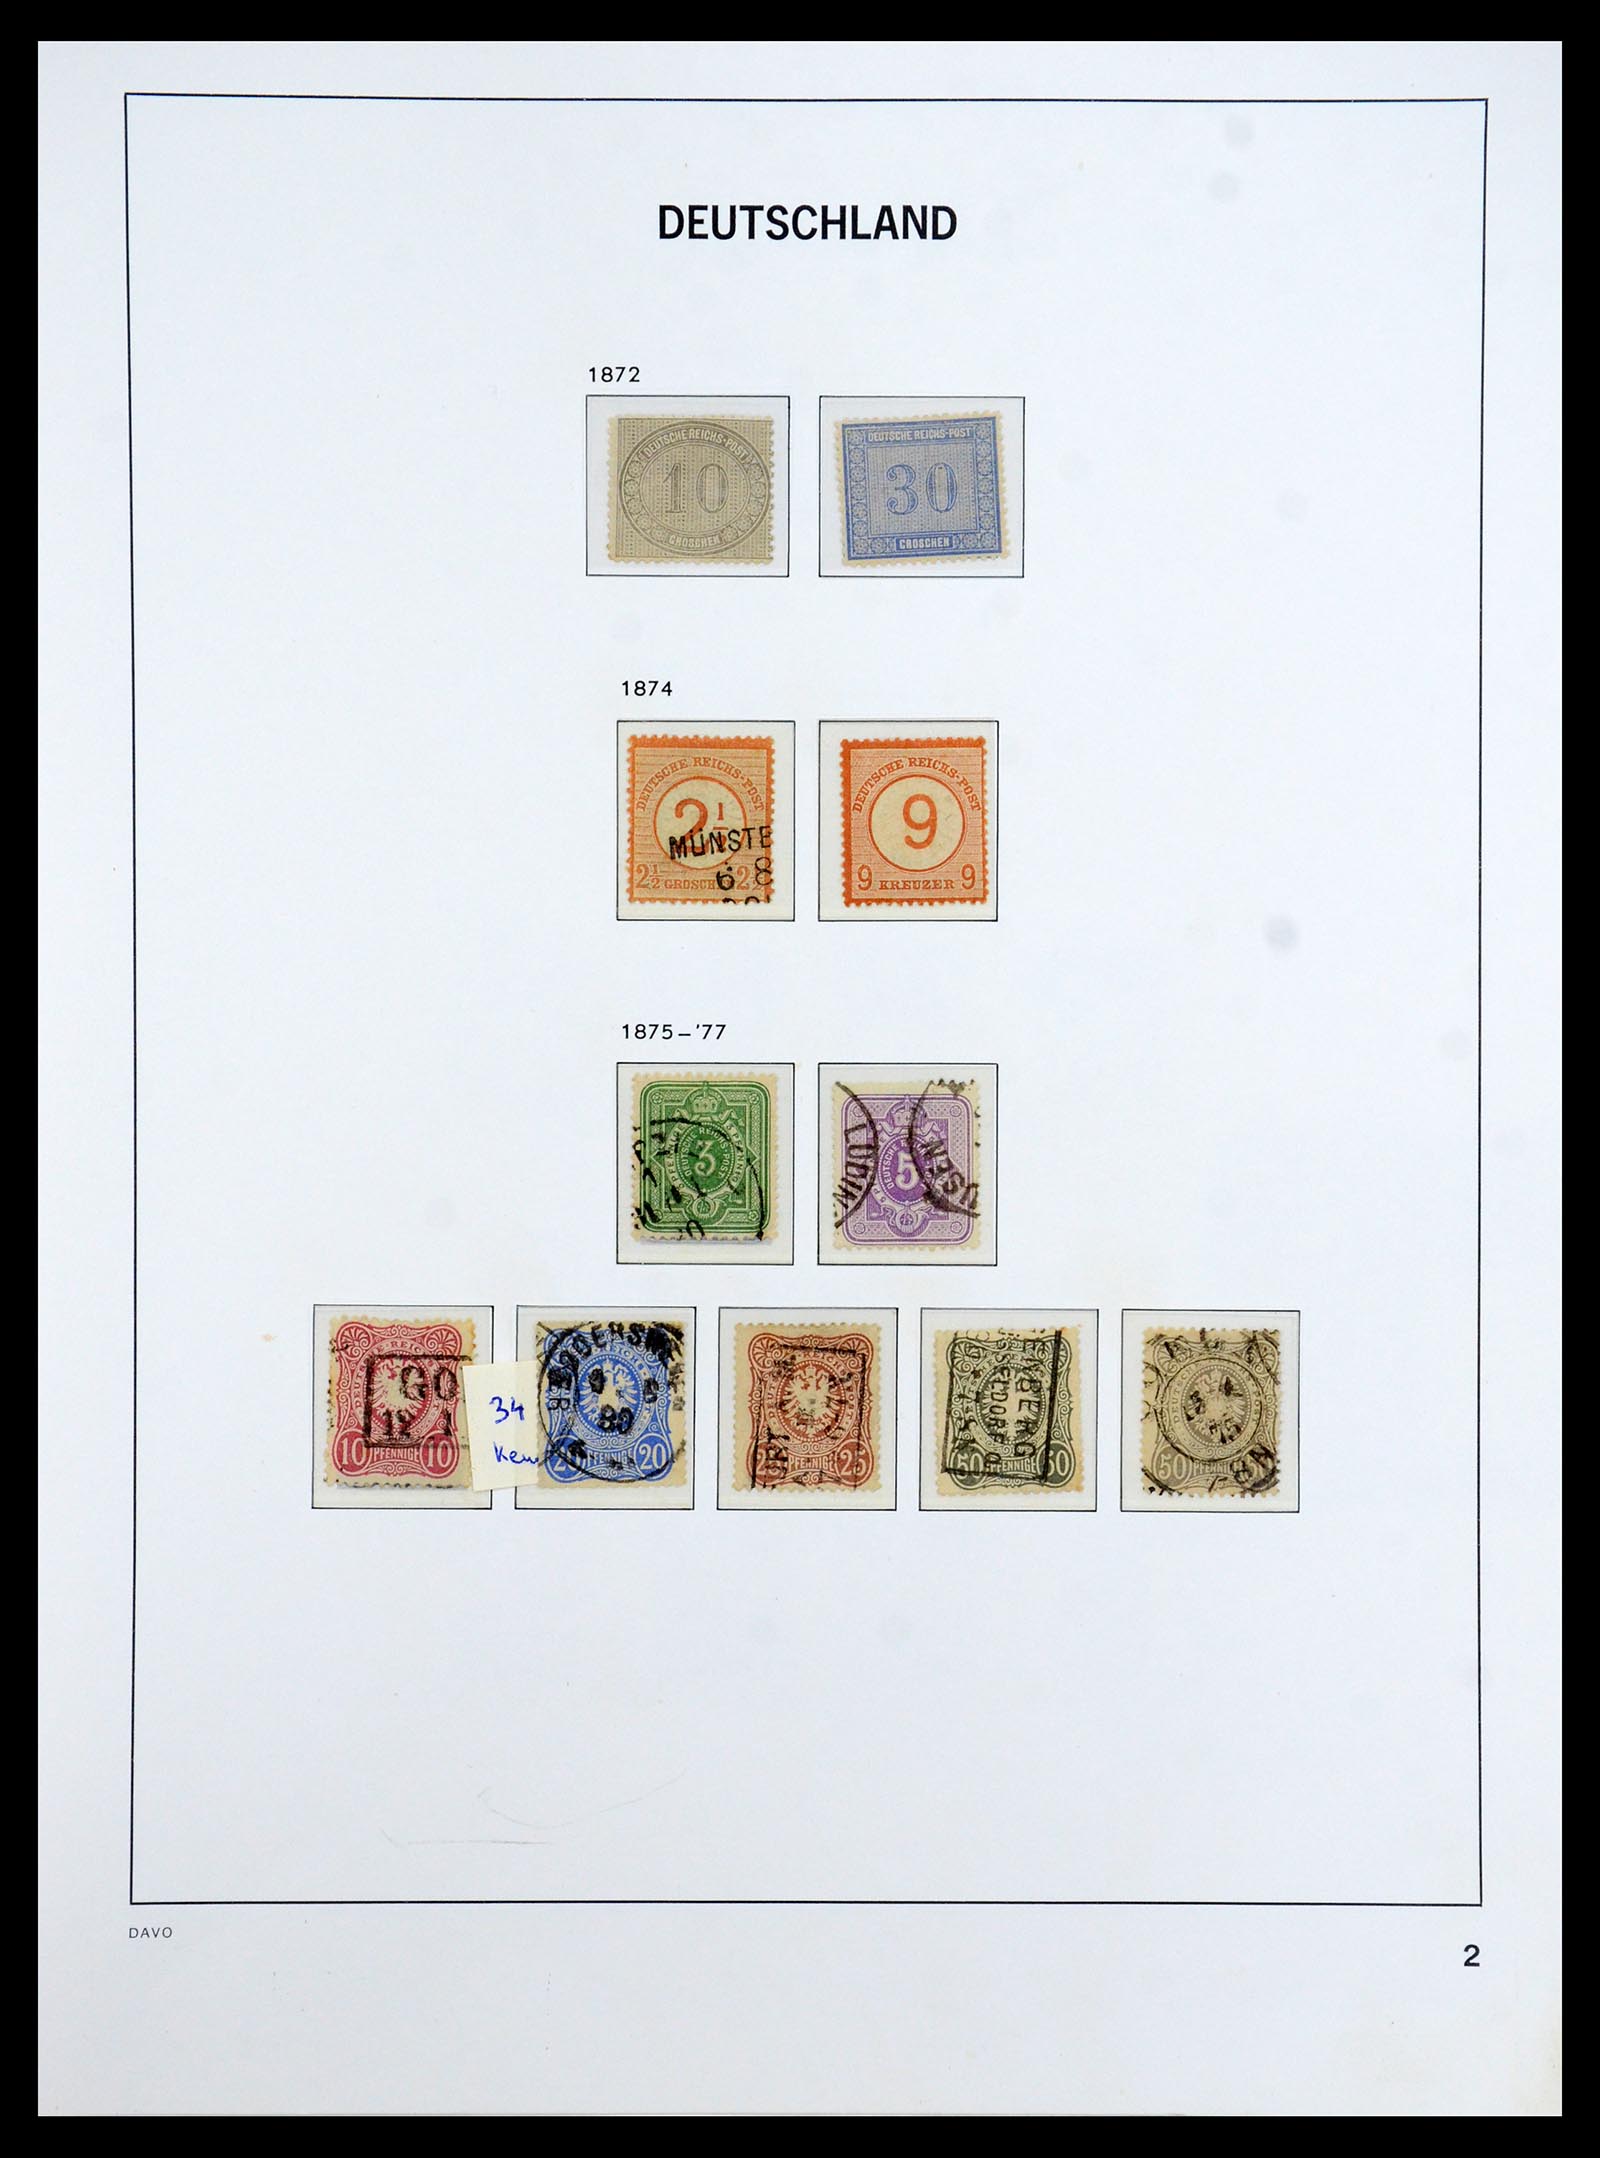 36399 002 - Stamp collection 36399 German Reich 1872-1945.